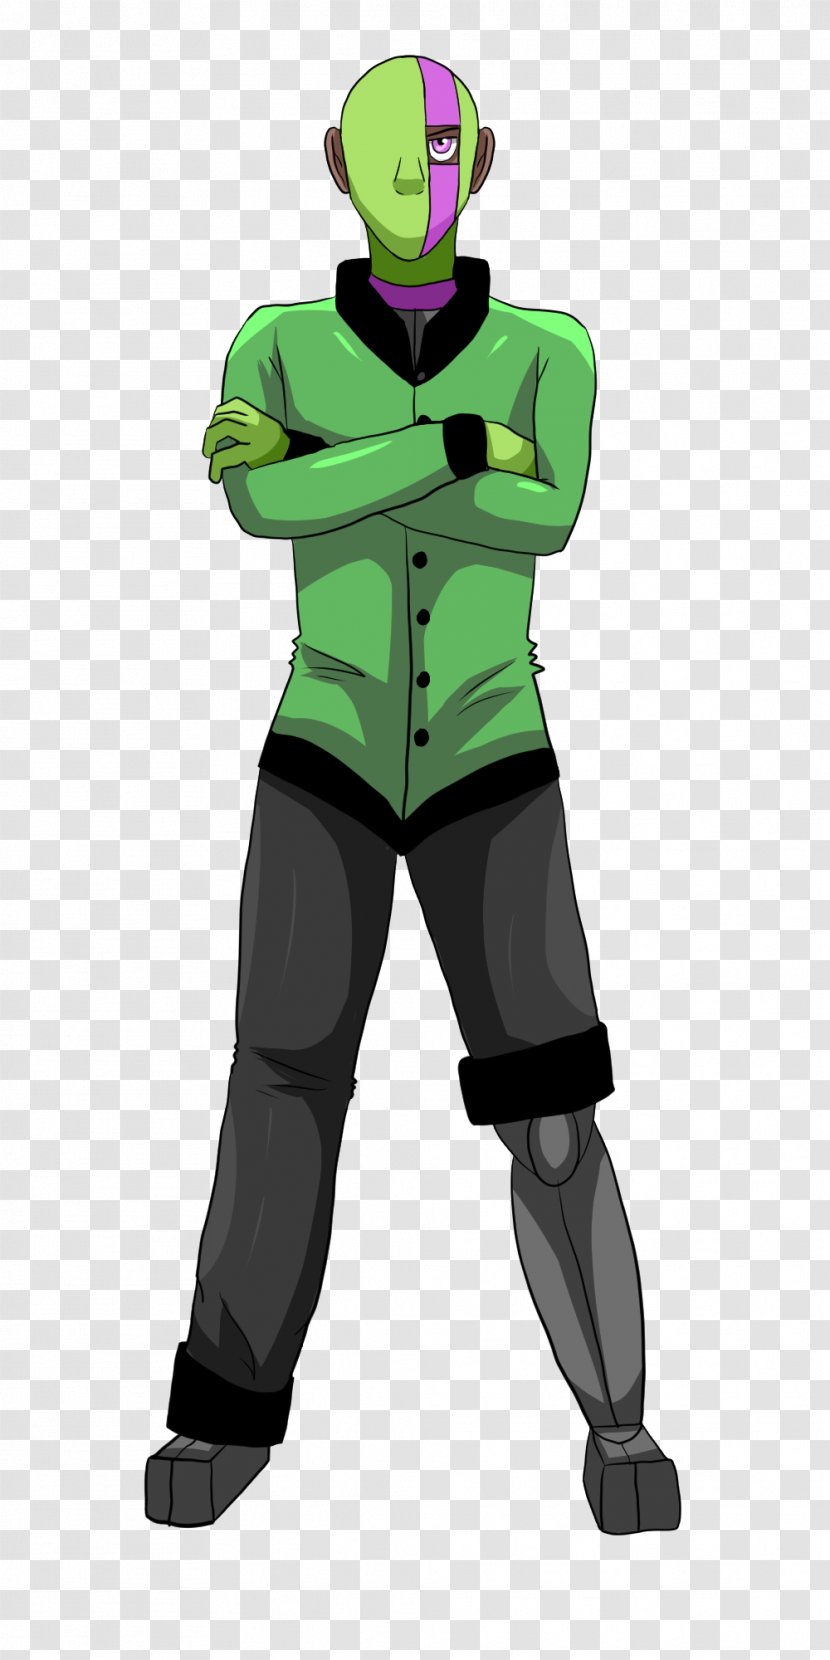 Animated Cartoon Illustration Green Headgear - Sports Equipment - Formal Attire Transparent PNG